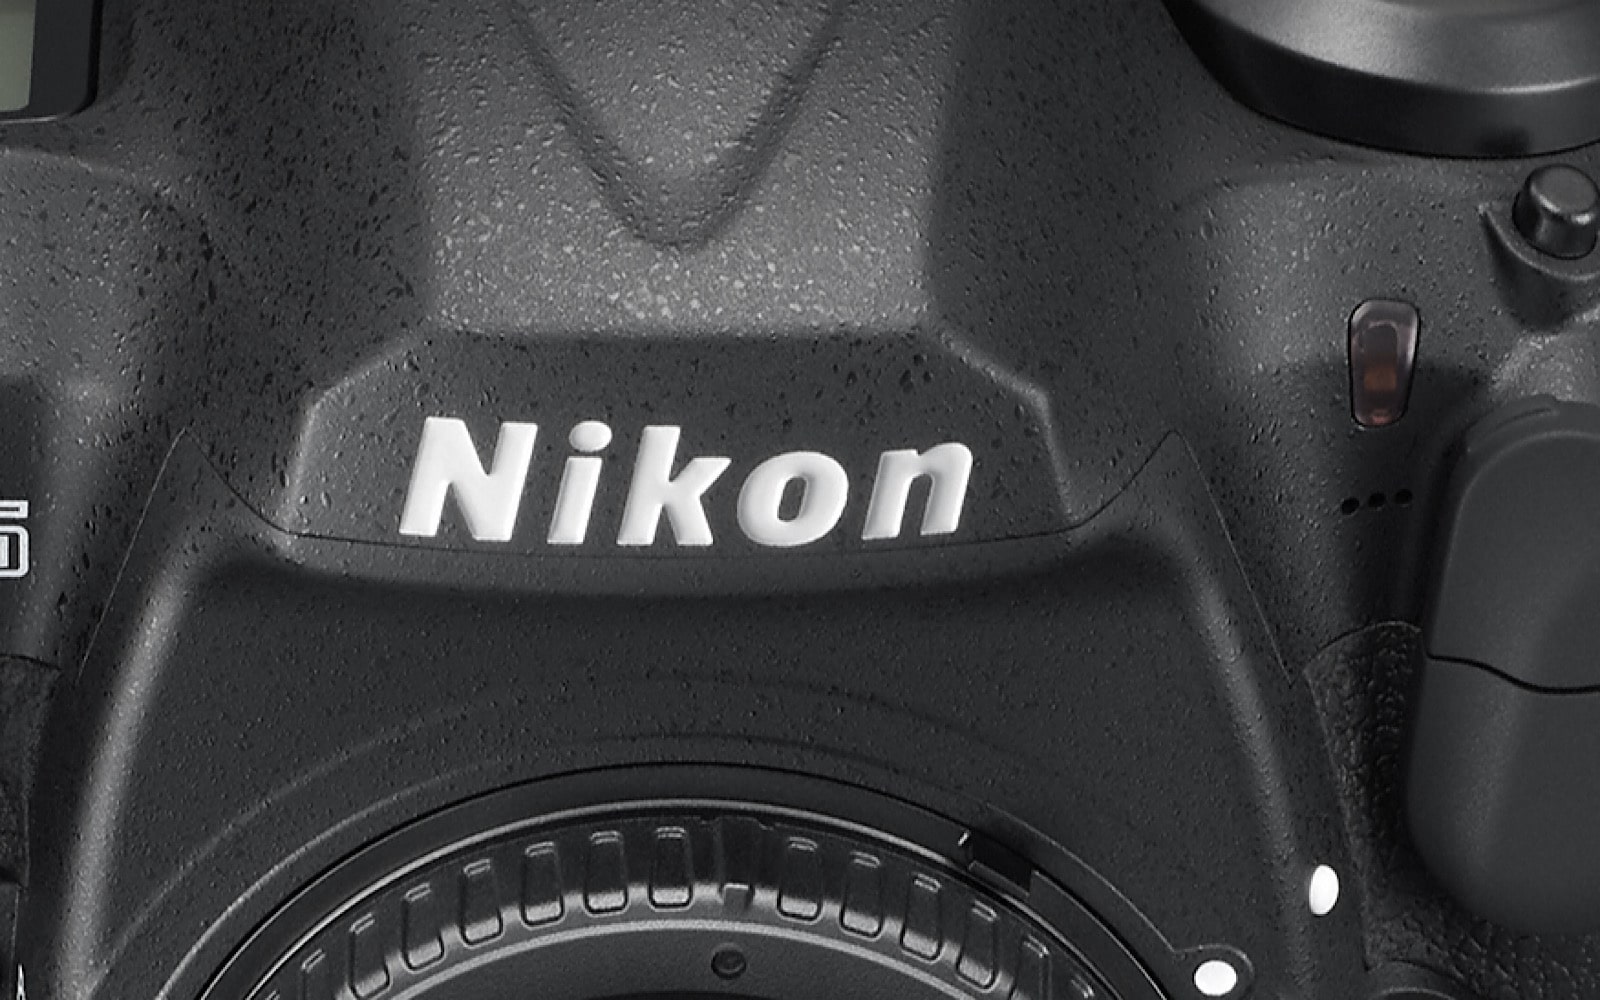 Nikon D-series camera